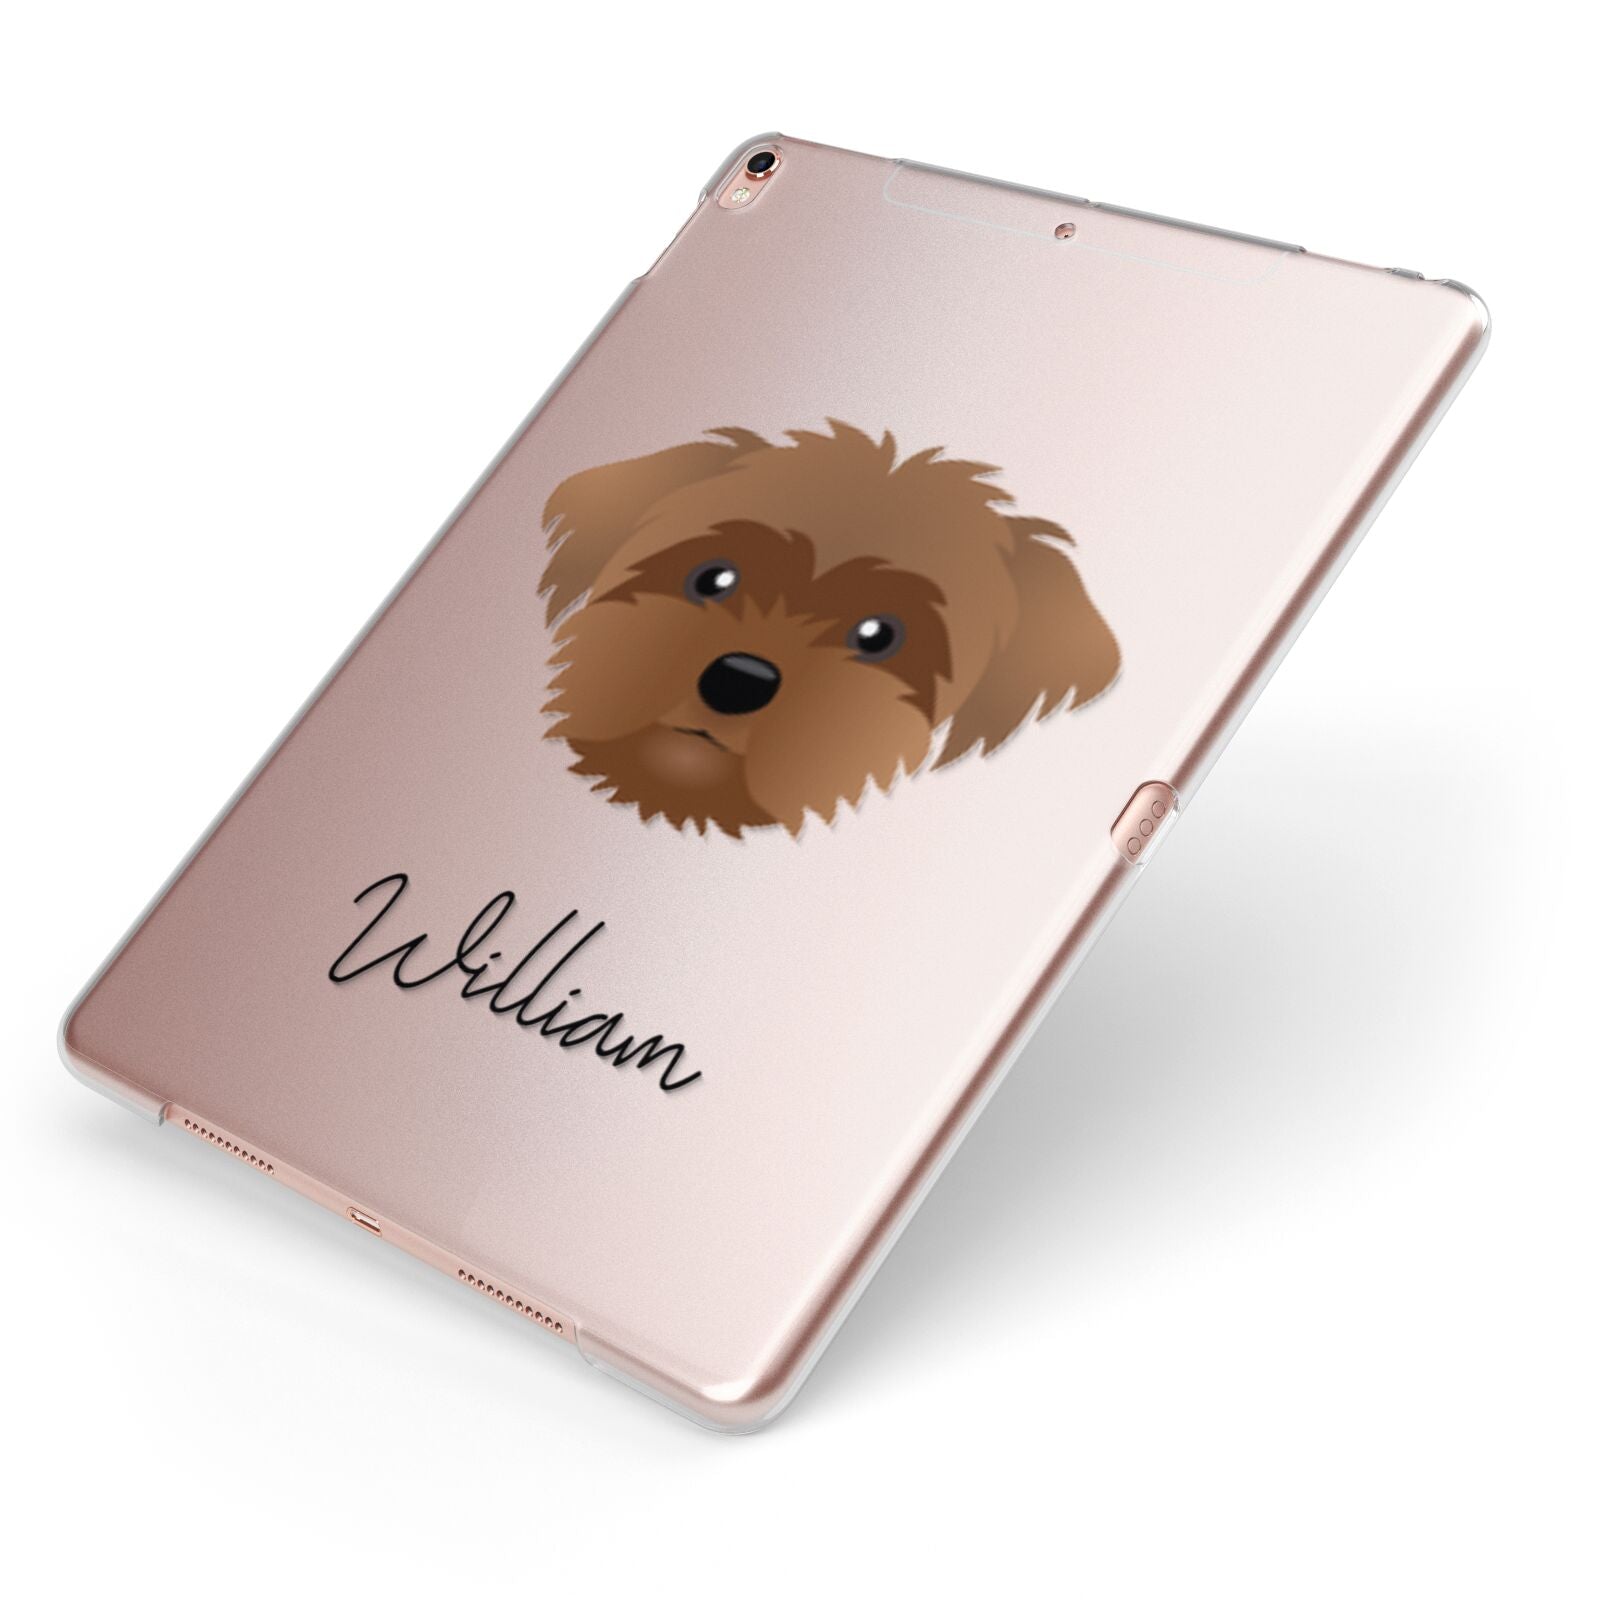 Peek a poo Personalised Apple iPad Case on Rose Gold iPad Side View